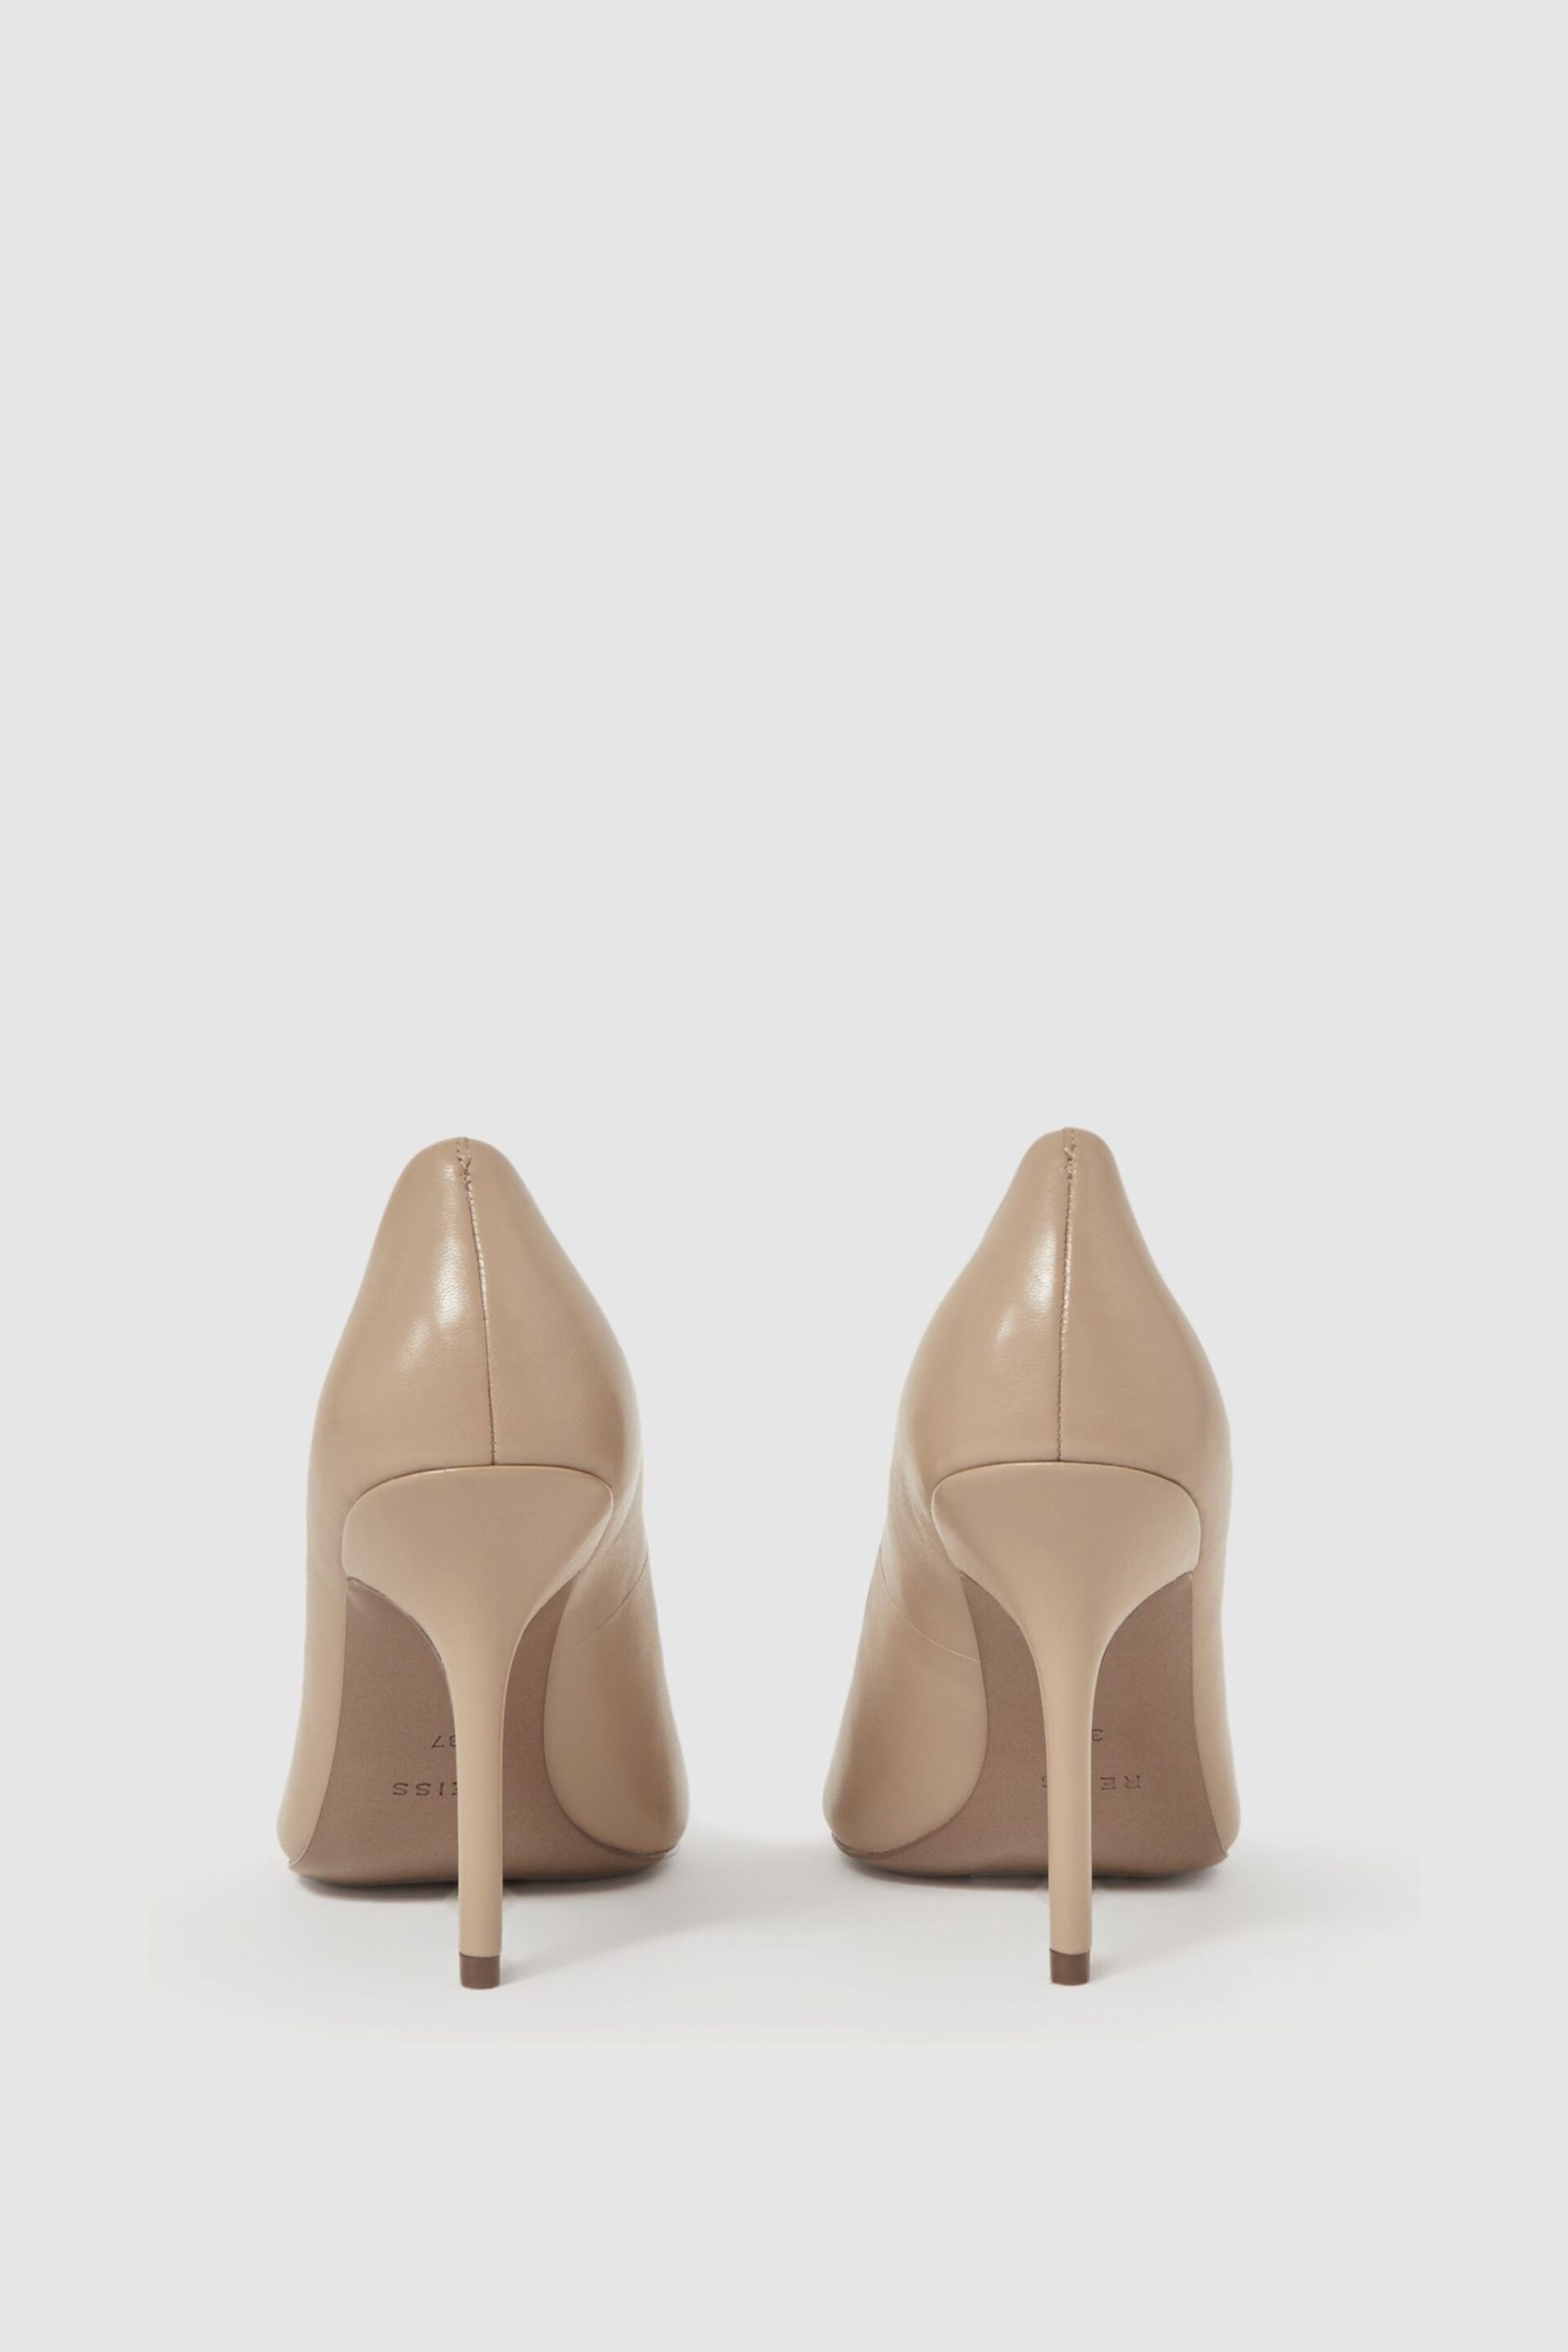 Reiss Nude Isla Leather Peep Toe Court Shoes - Image 4 of 5